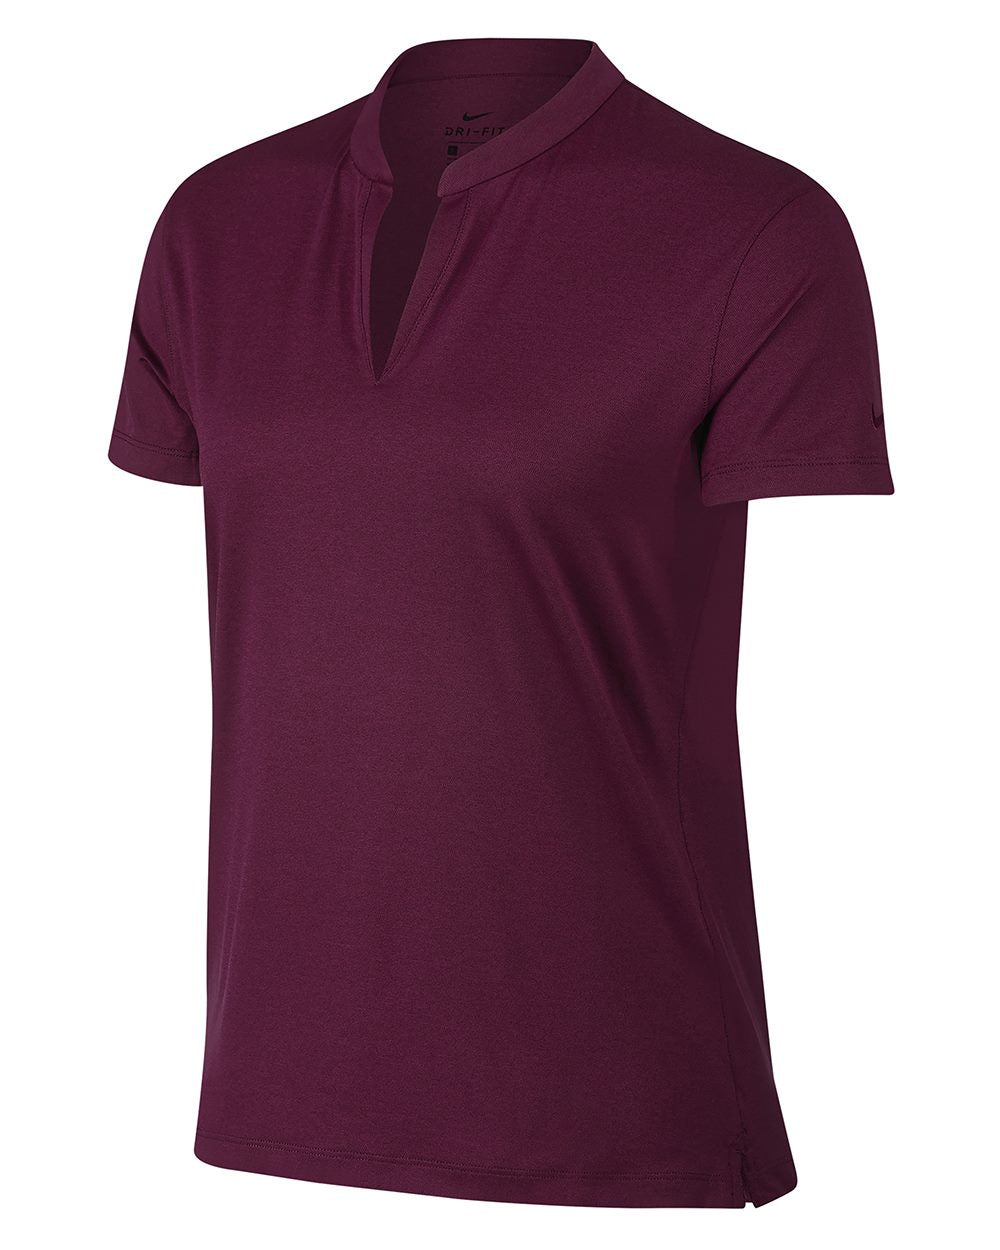 Nike Women’s Golf Sport Shirt – XL - Obsidian color **Discontinued***